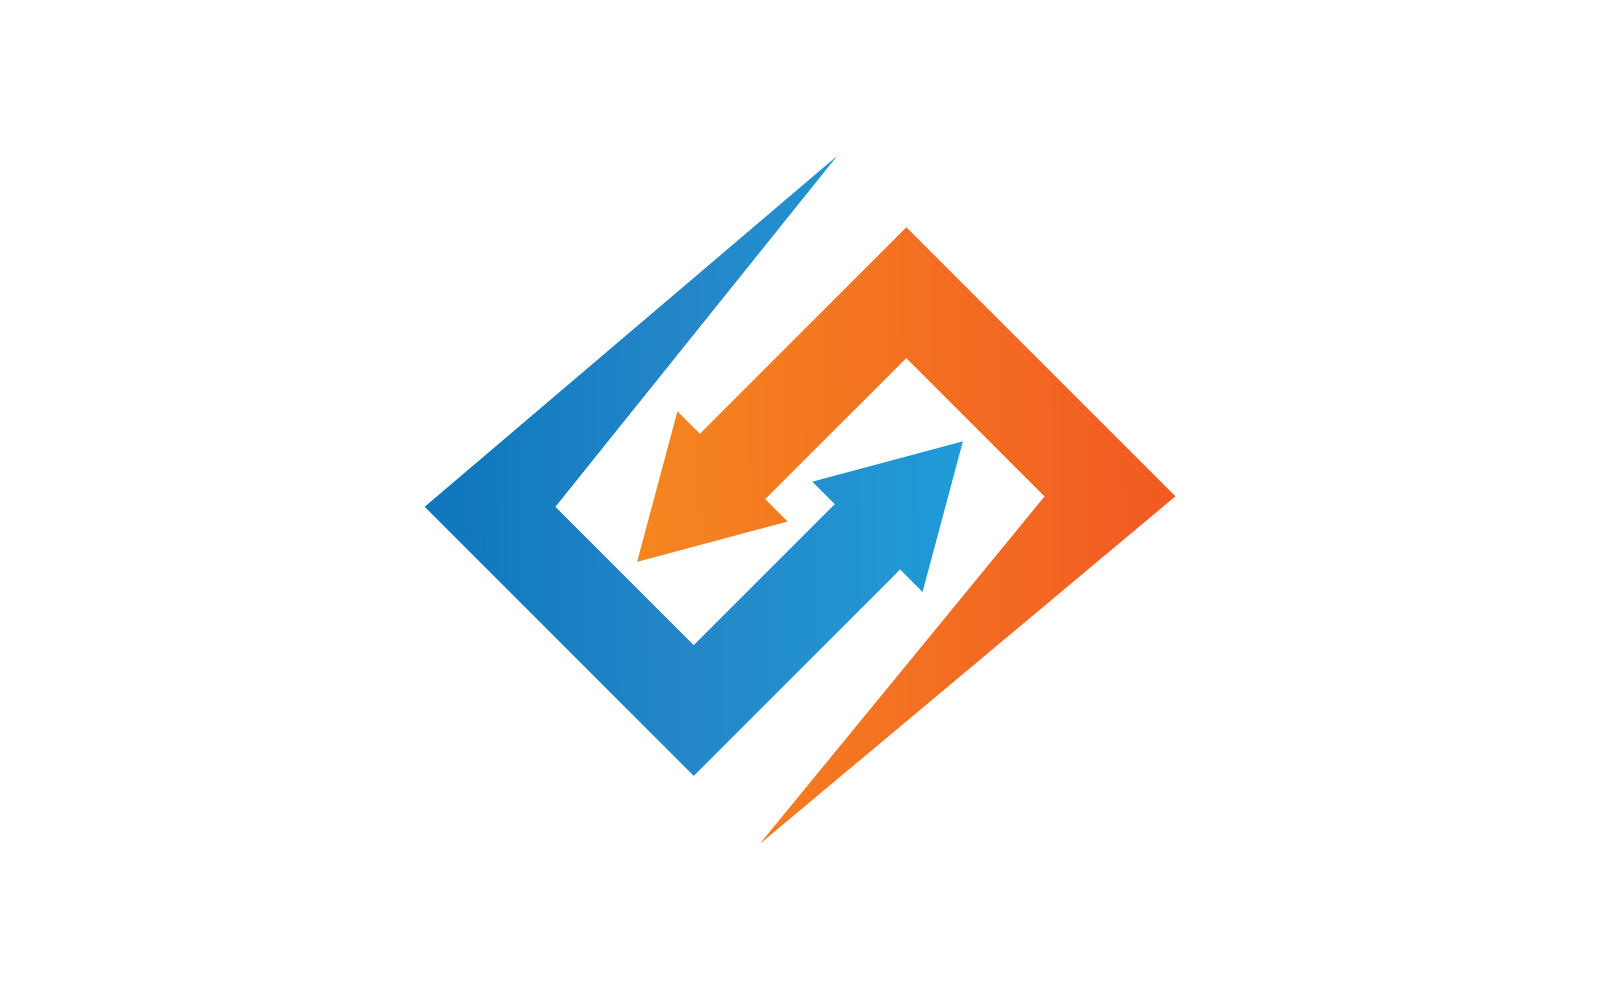 Business finance arrow logo ilustration design template